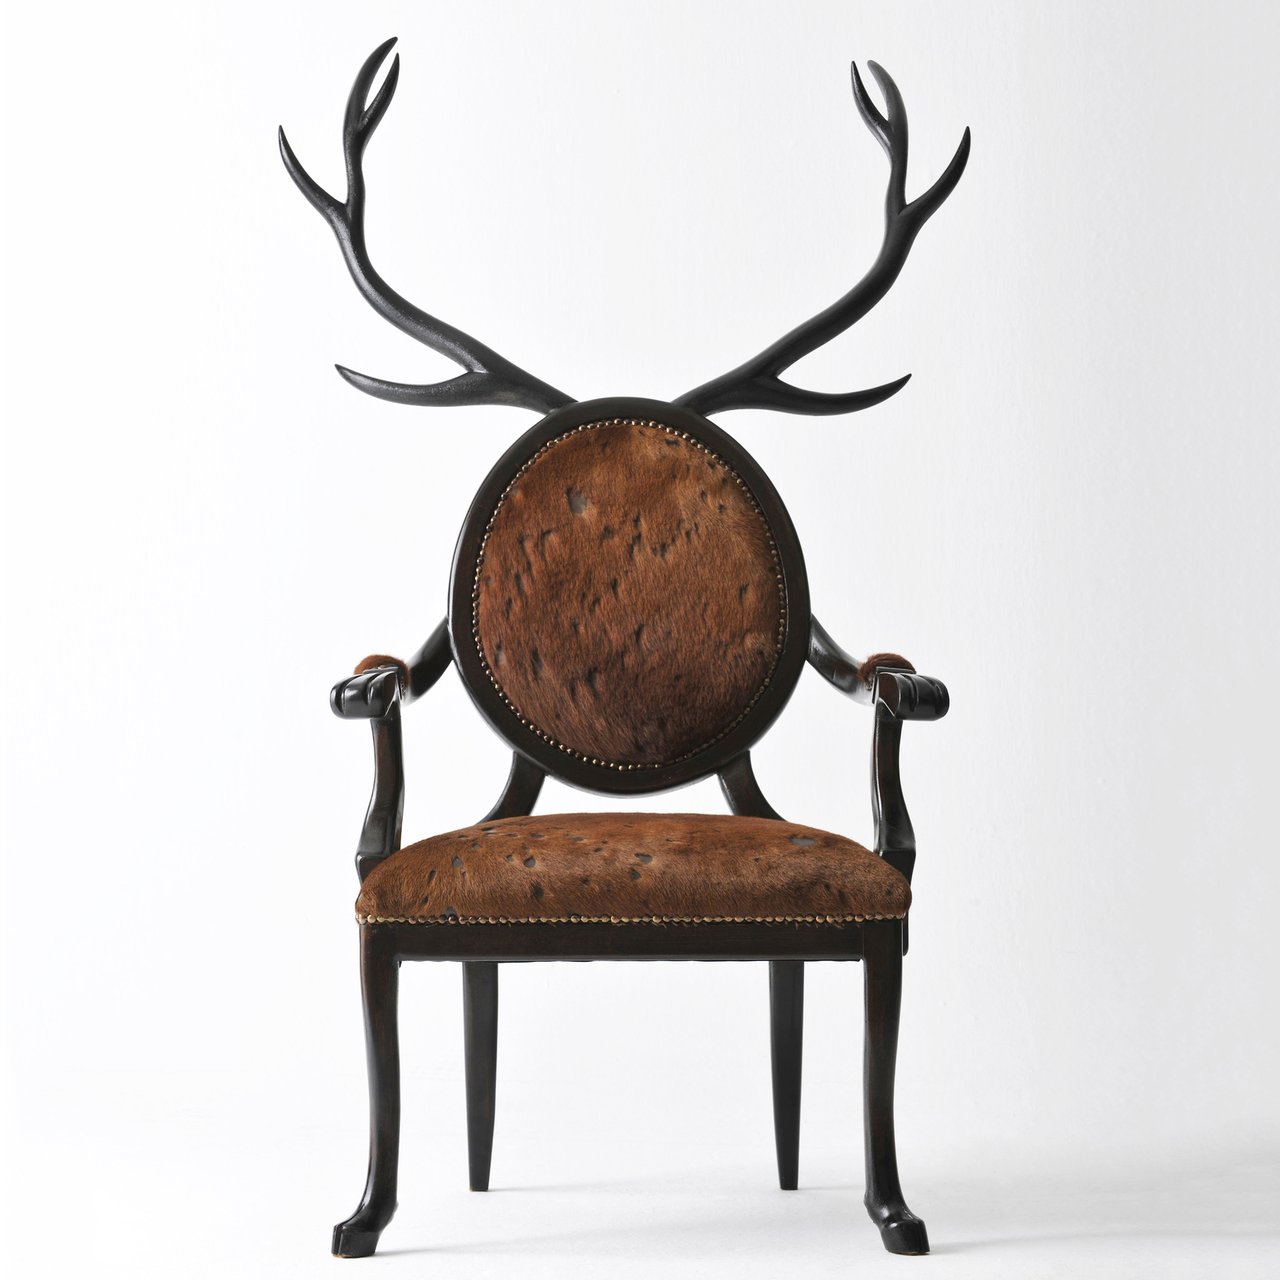 Hybrid No. 1 Antler Chair by Merve Kahraman